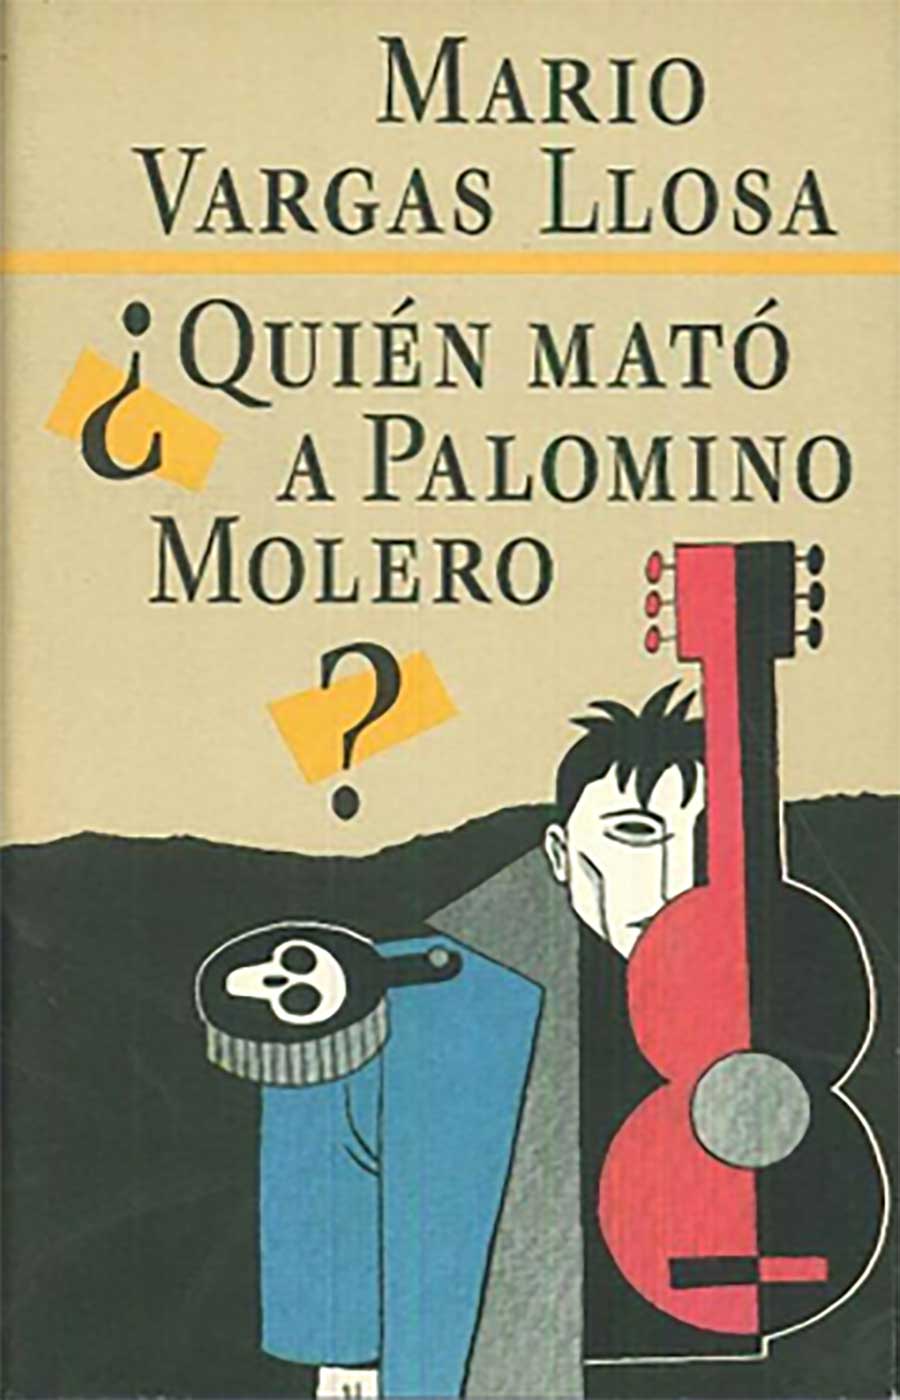 ¿Quién mato a Palomino Molero?, octava novela del escritor peruano Mario Vargas Llosa